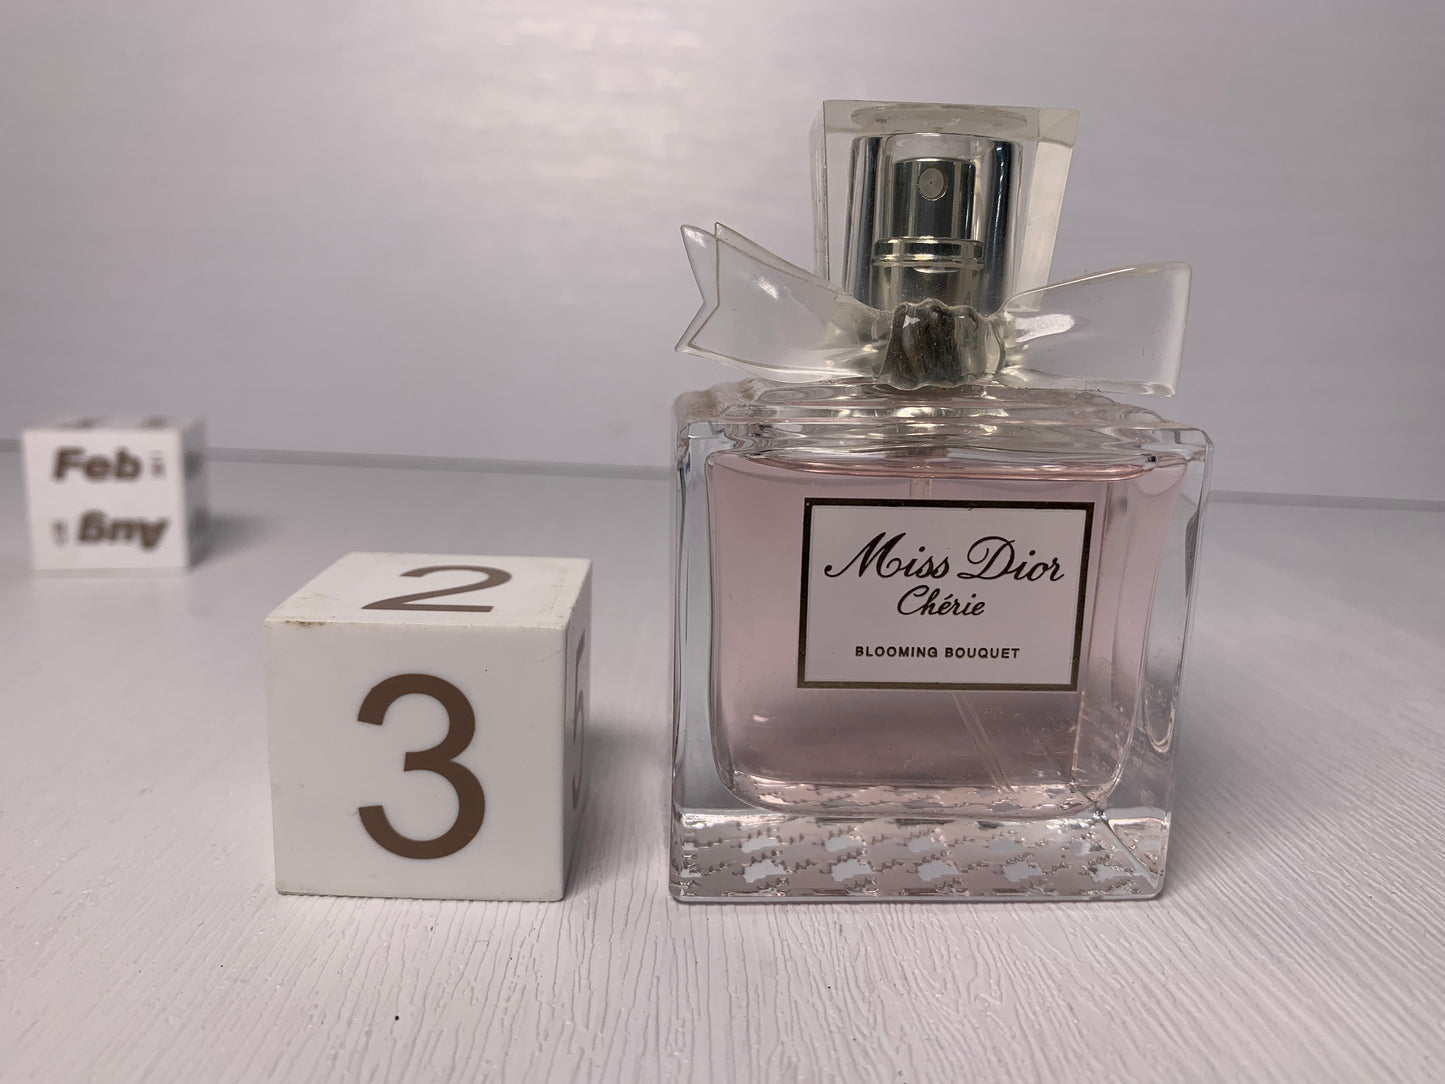 Rare Miss Dior Cherie 50 毫升 1.7 盎司淡香水淡香水香水 - 6FEB22